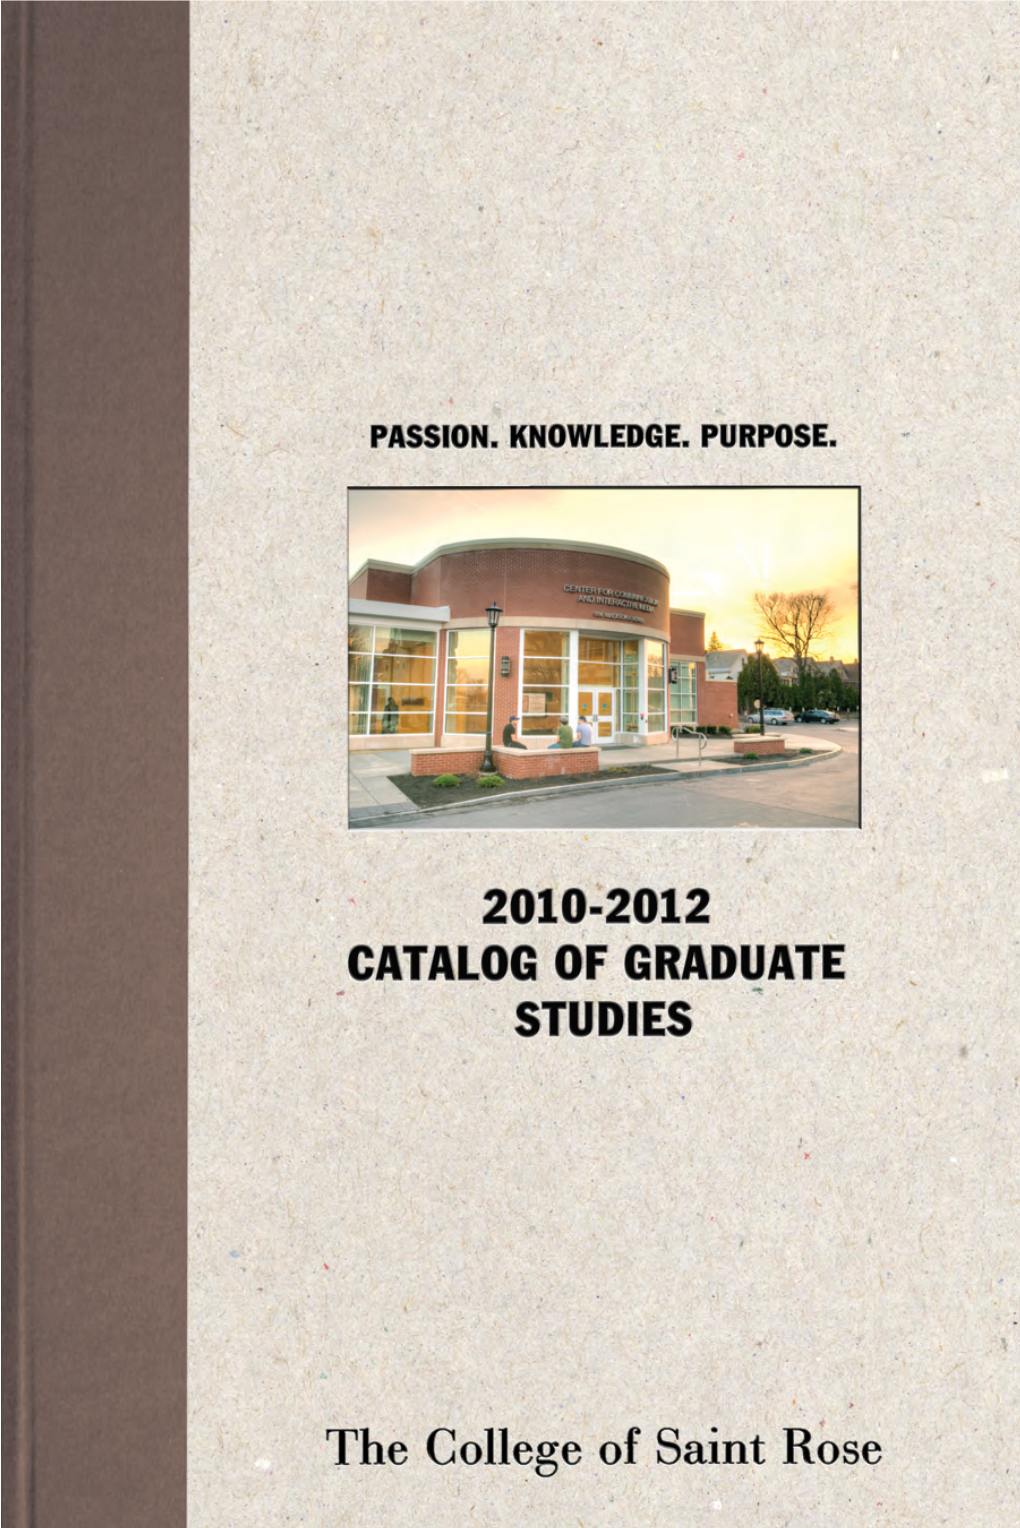 St. Rose Graduate Catalog 10-12